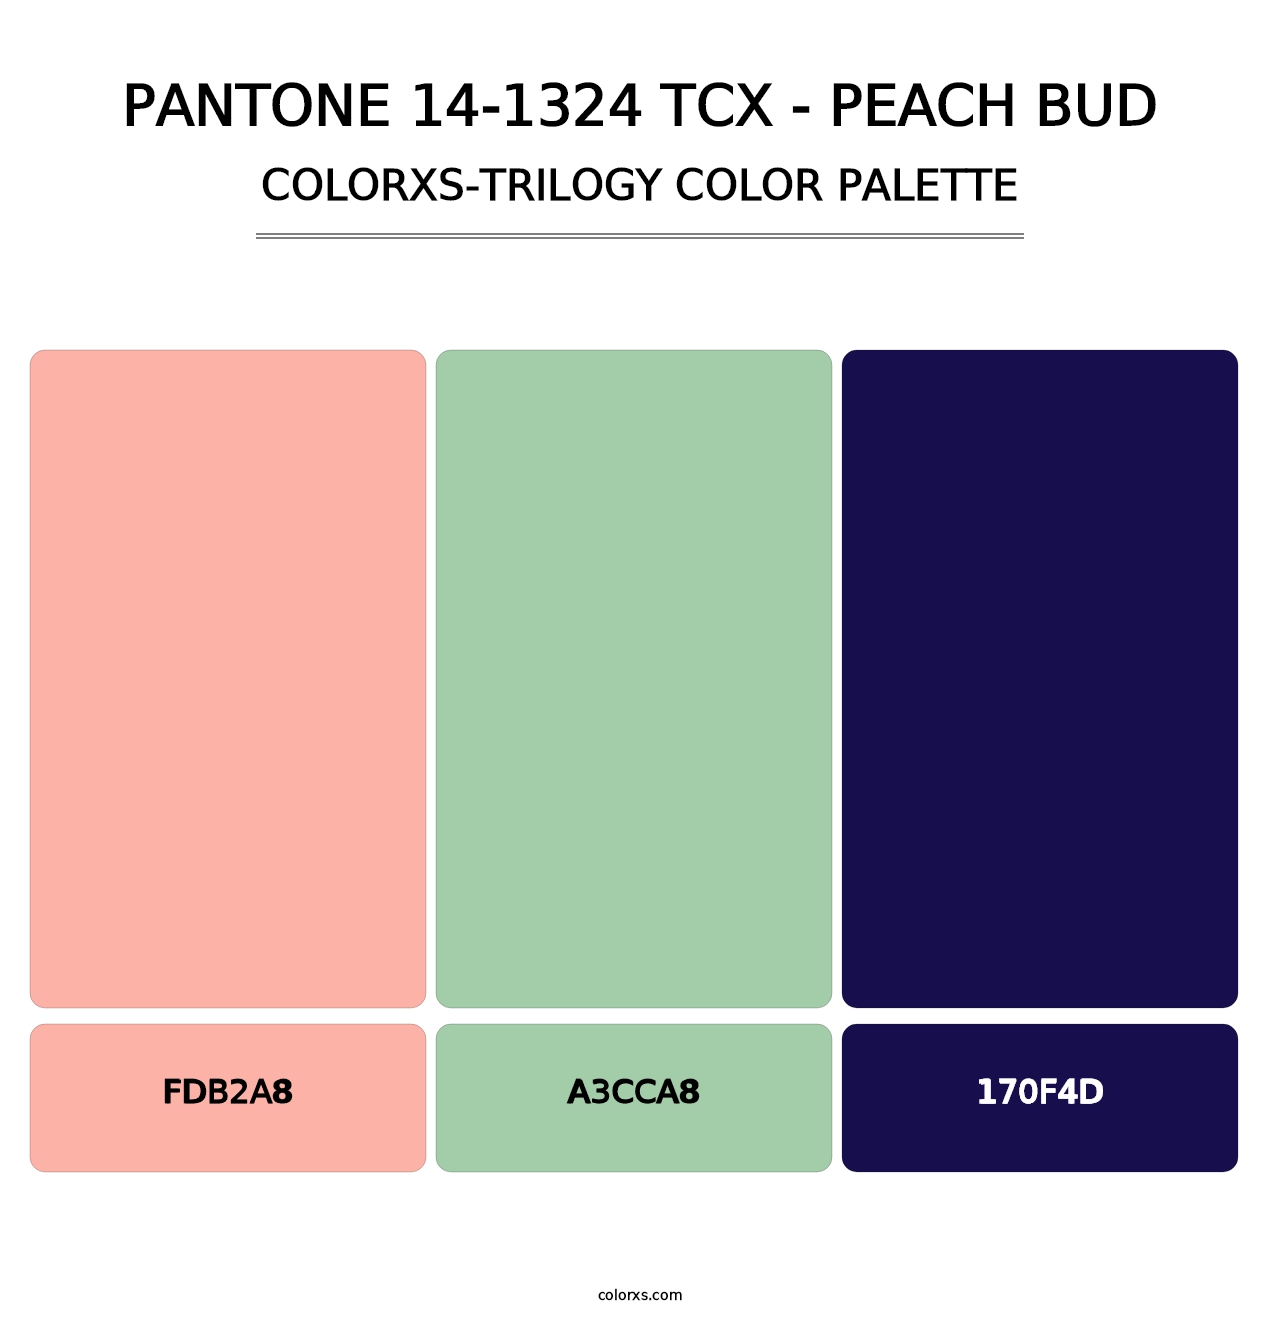 PANTONE 14-1324 TCX - Peach Bud - Colorxs Trilogy Palette